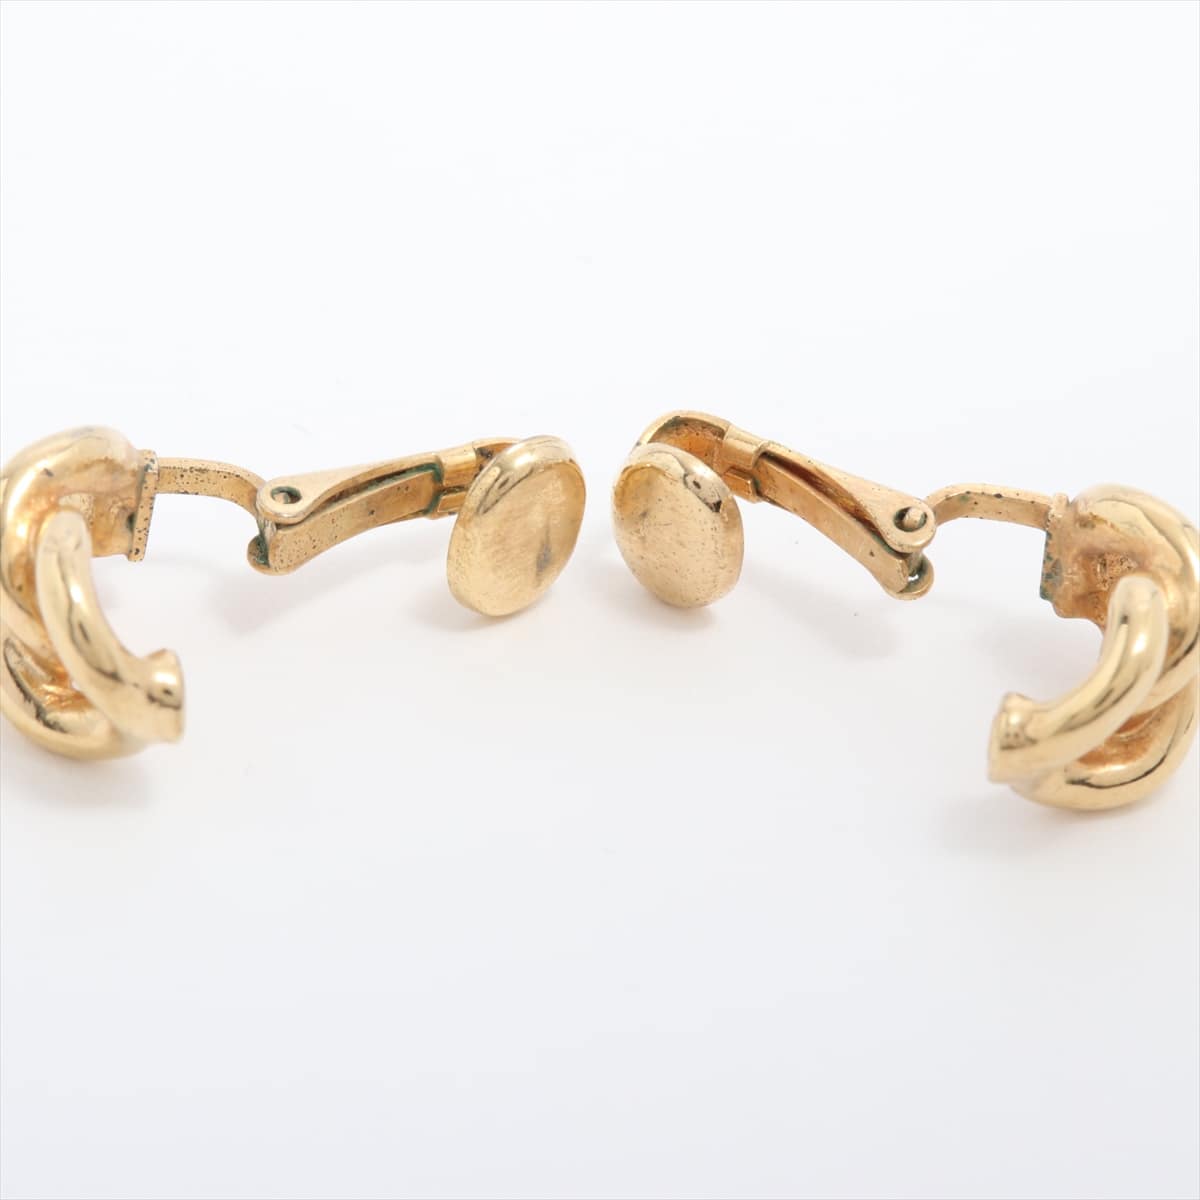 Christian Dior Earrings (for both ears) GP Gold